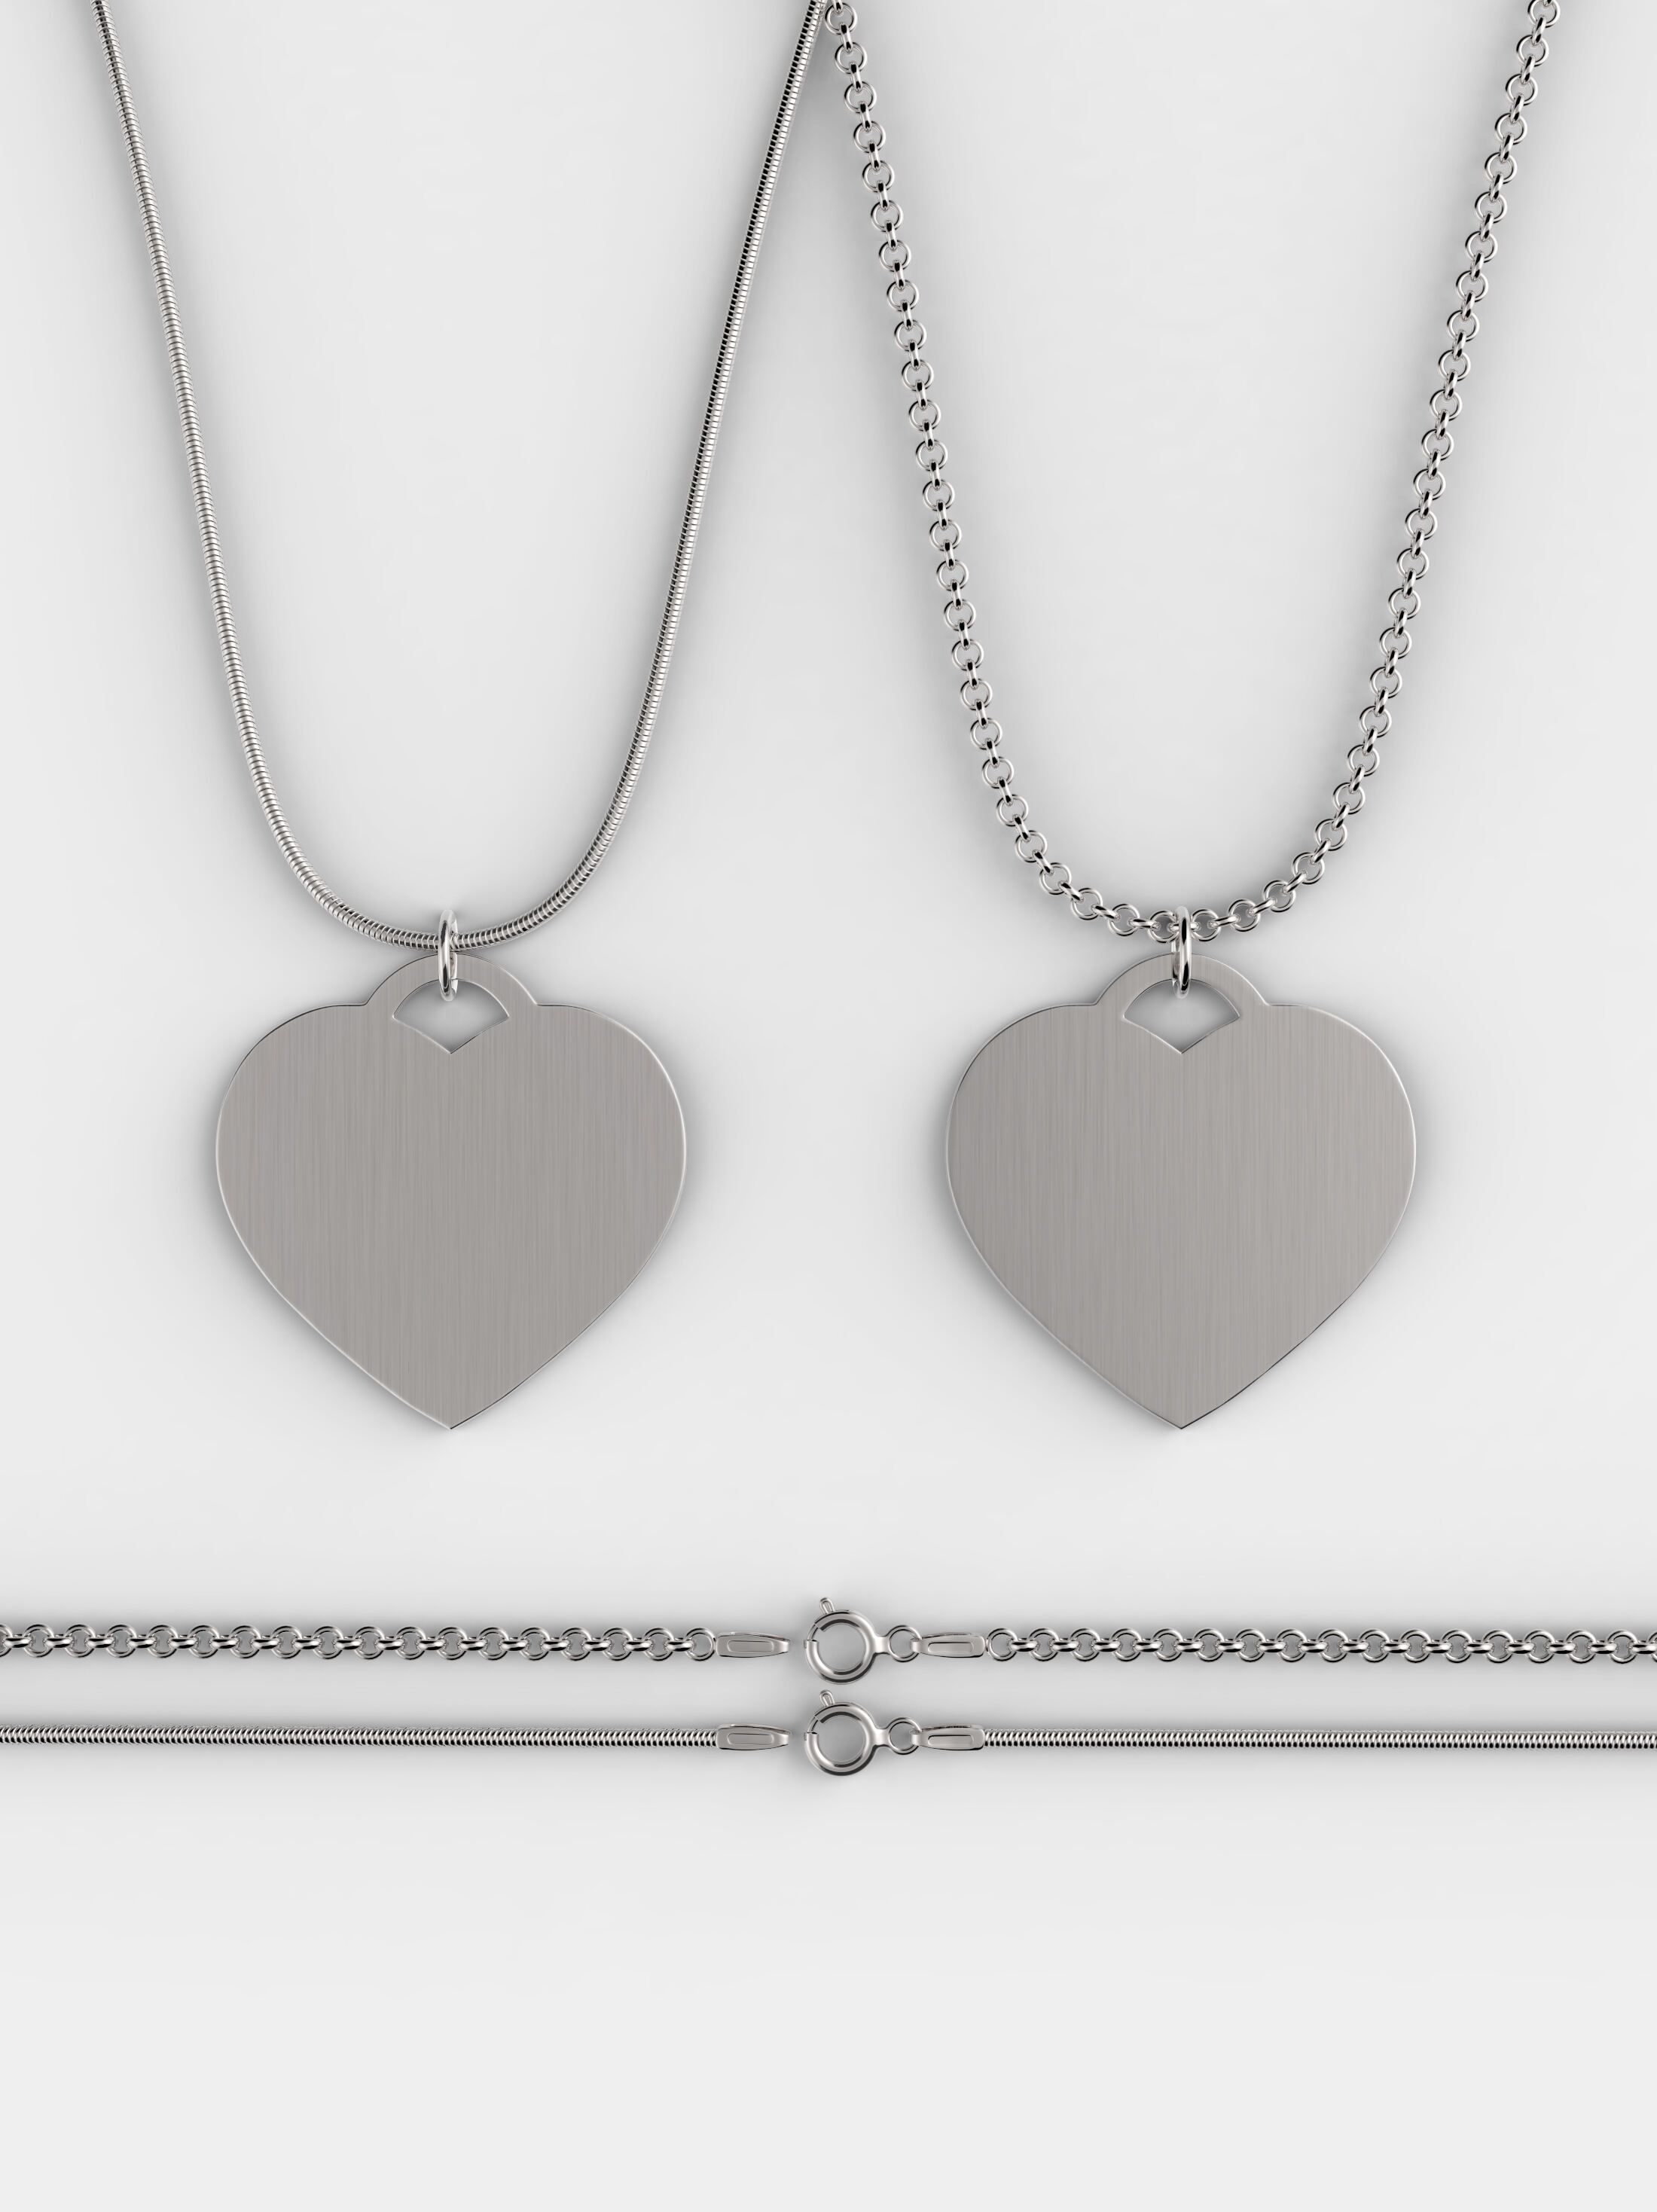 custom heart necklace options